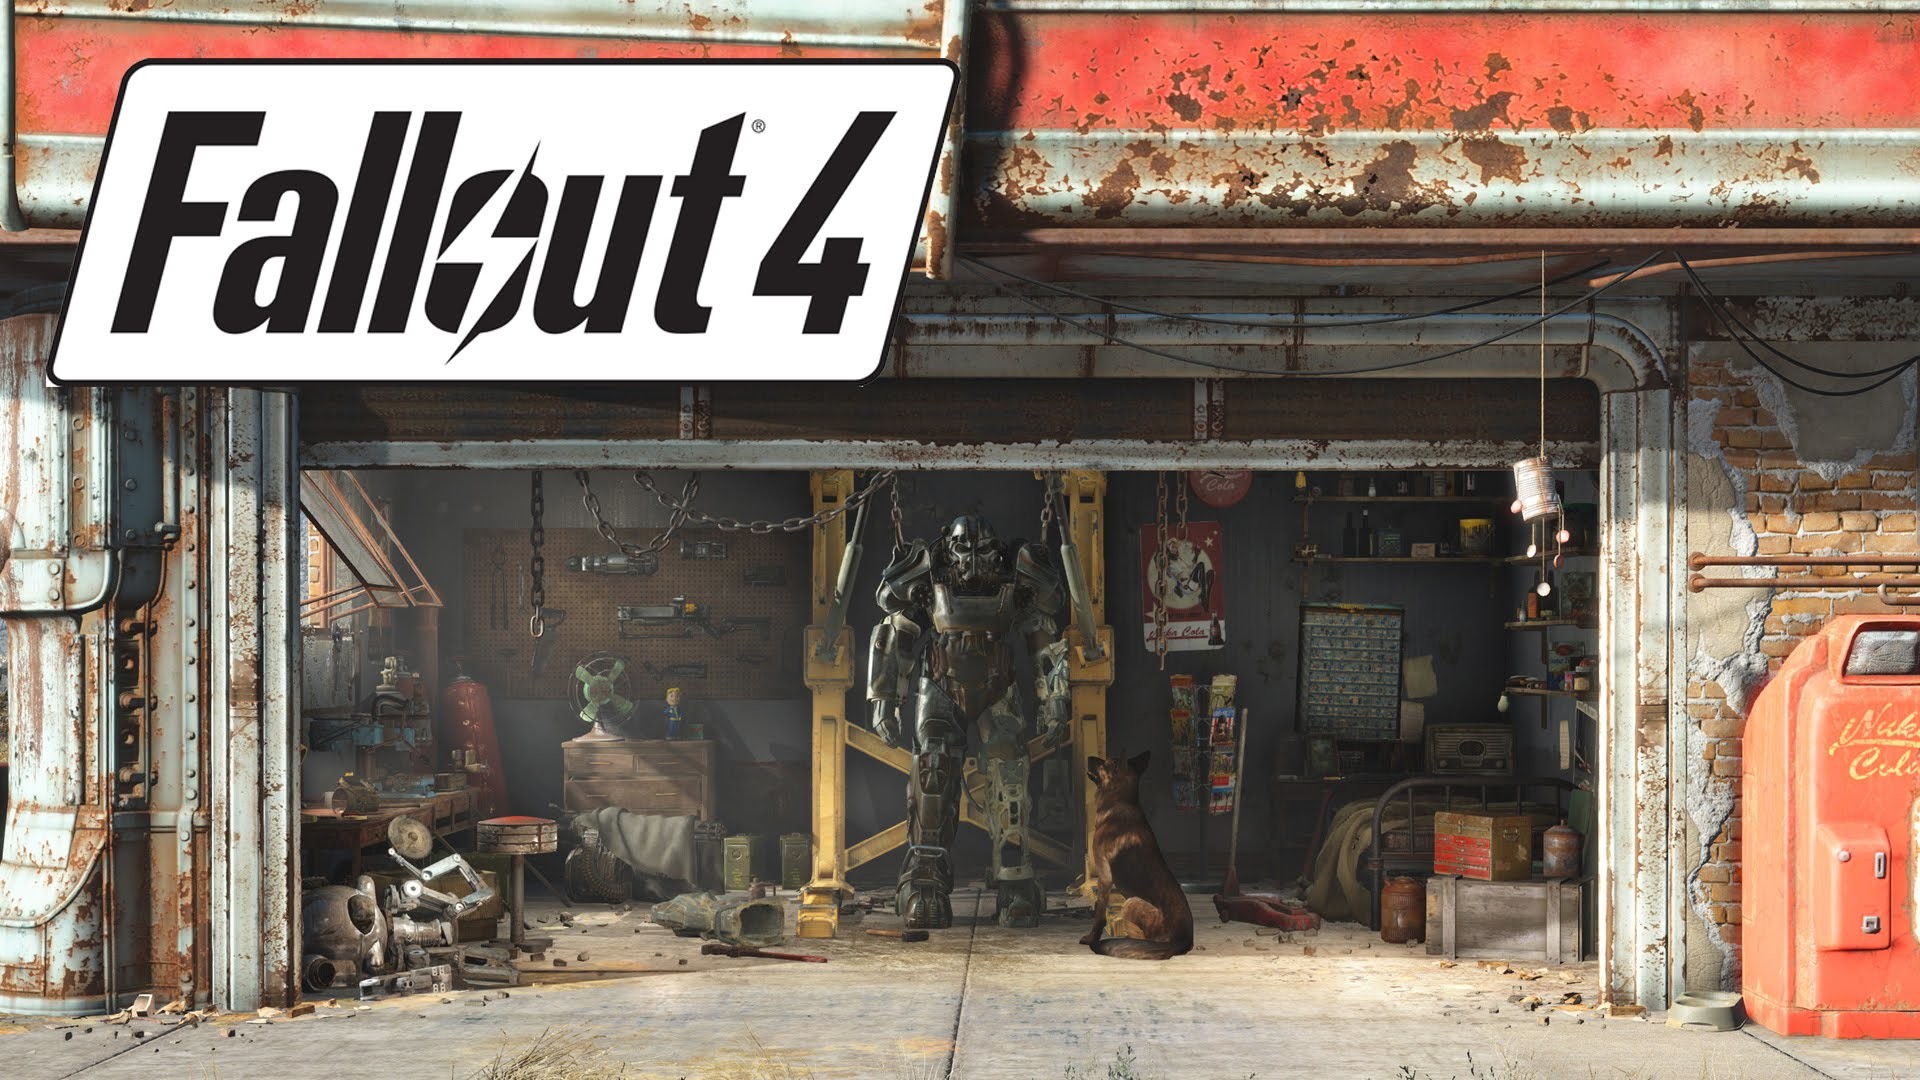 1920x1080 Fallout 4 - Home / Garage / Craft Area Anaylsis (Customization) - YouTube